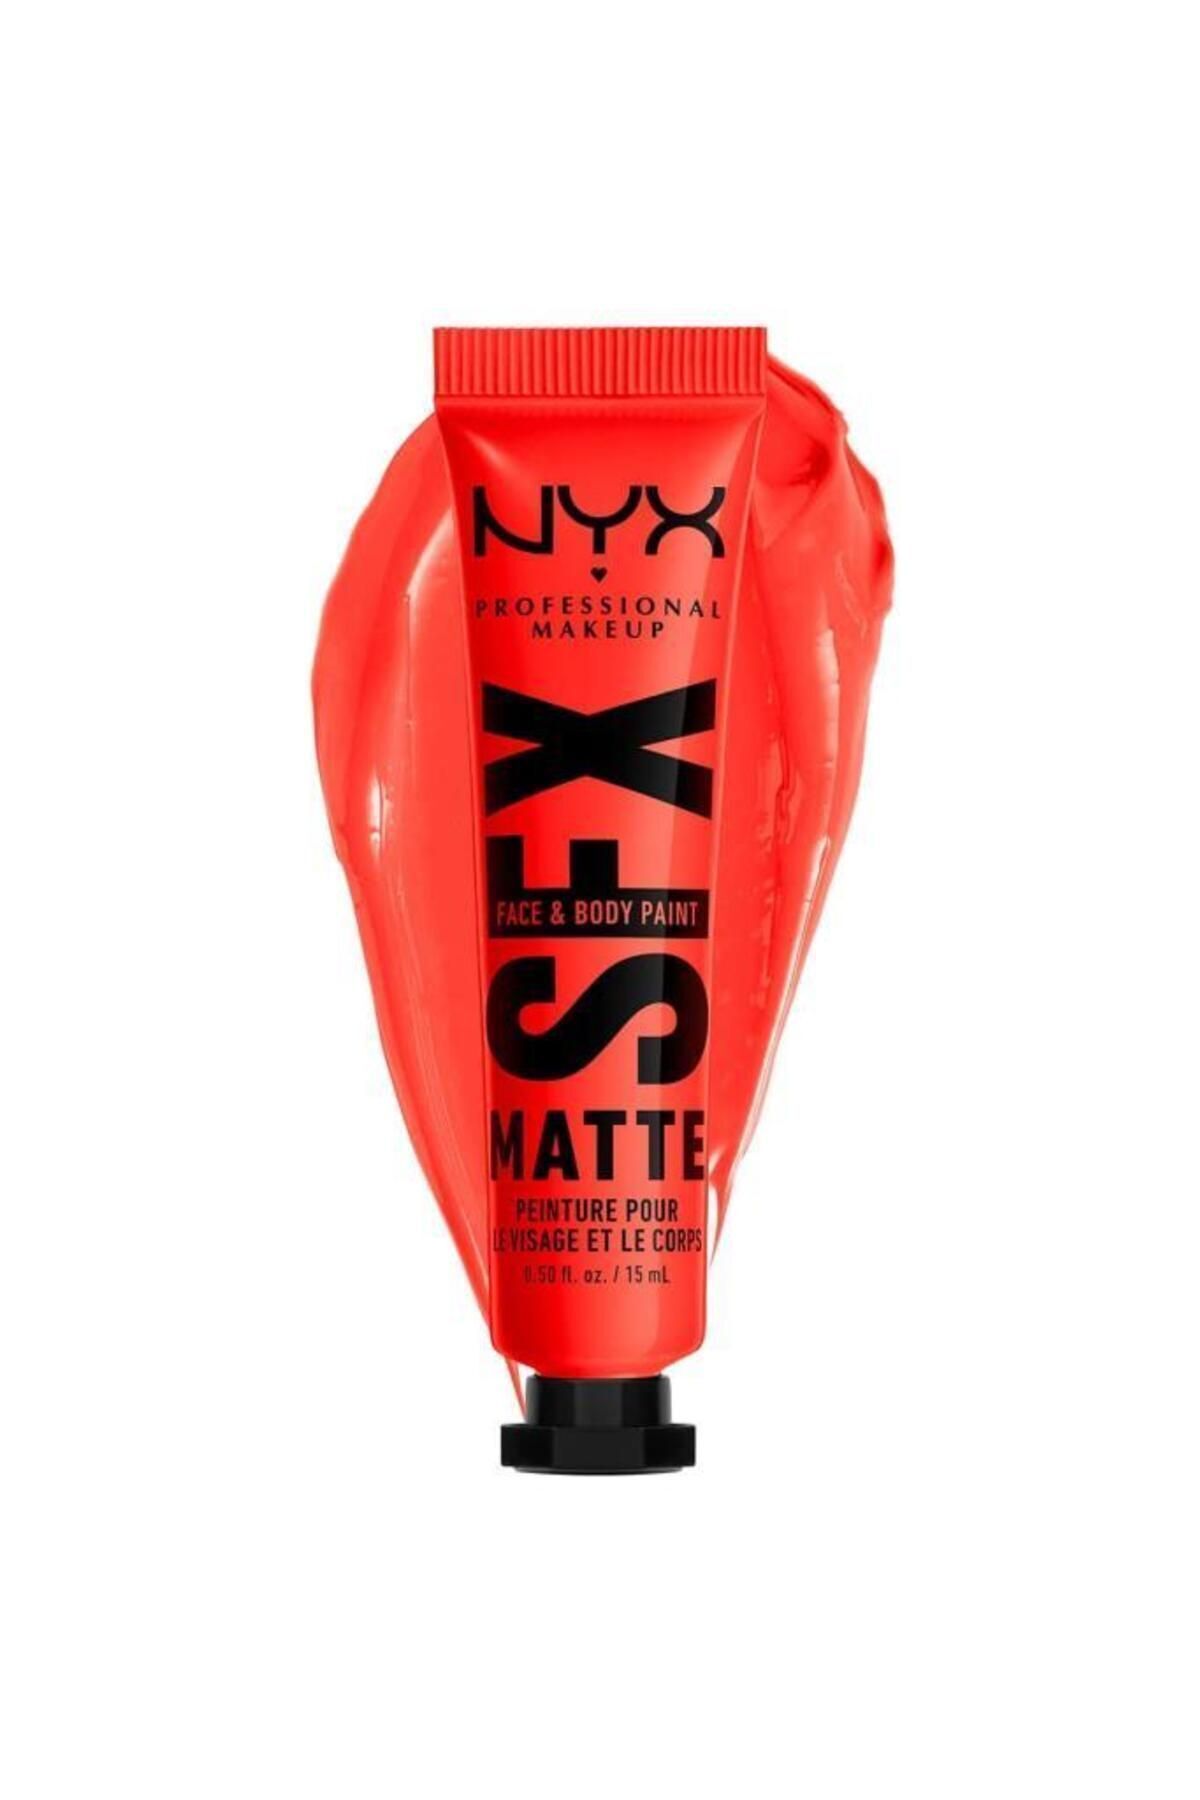 NYX Professional Makeup Sfx Paint Fired Up - Turuncu Yüz Ve Vücut Boyası